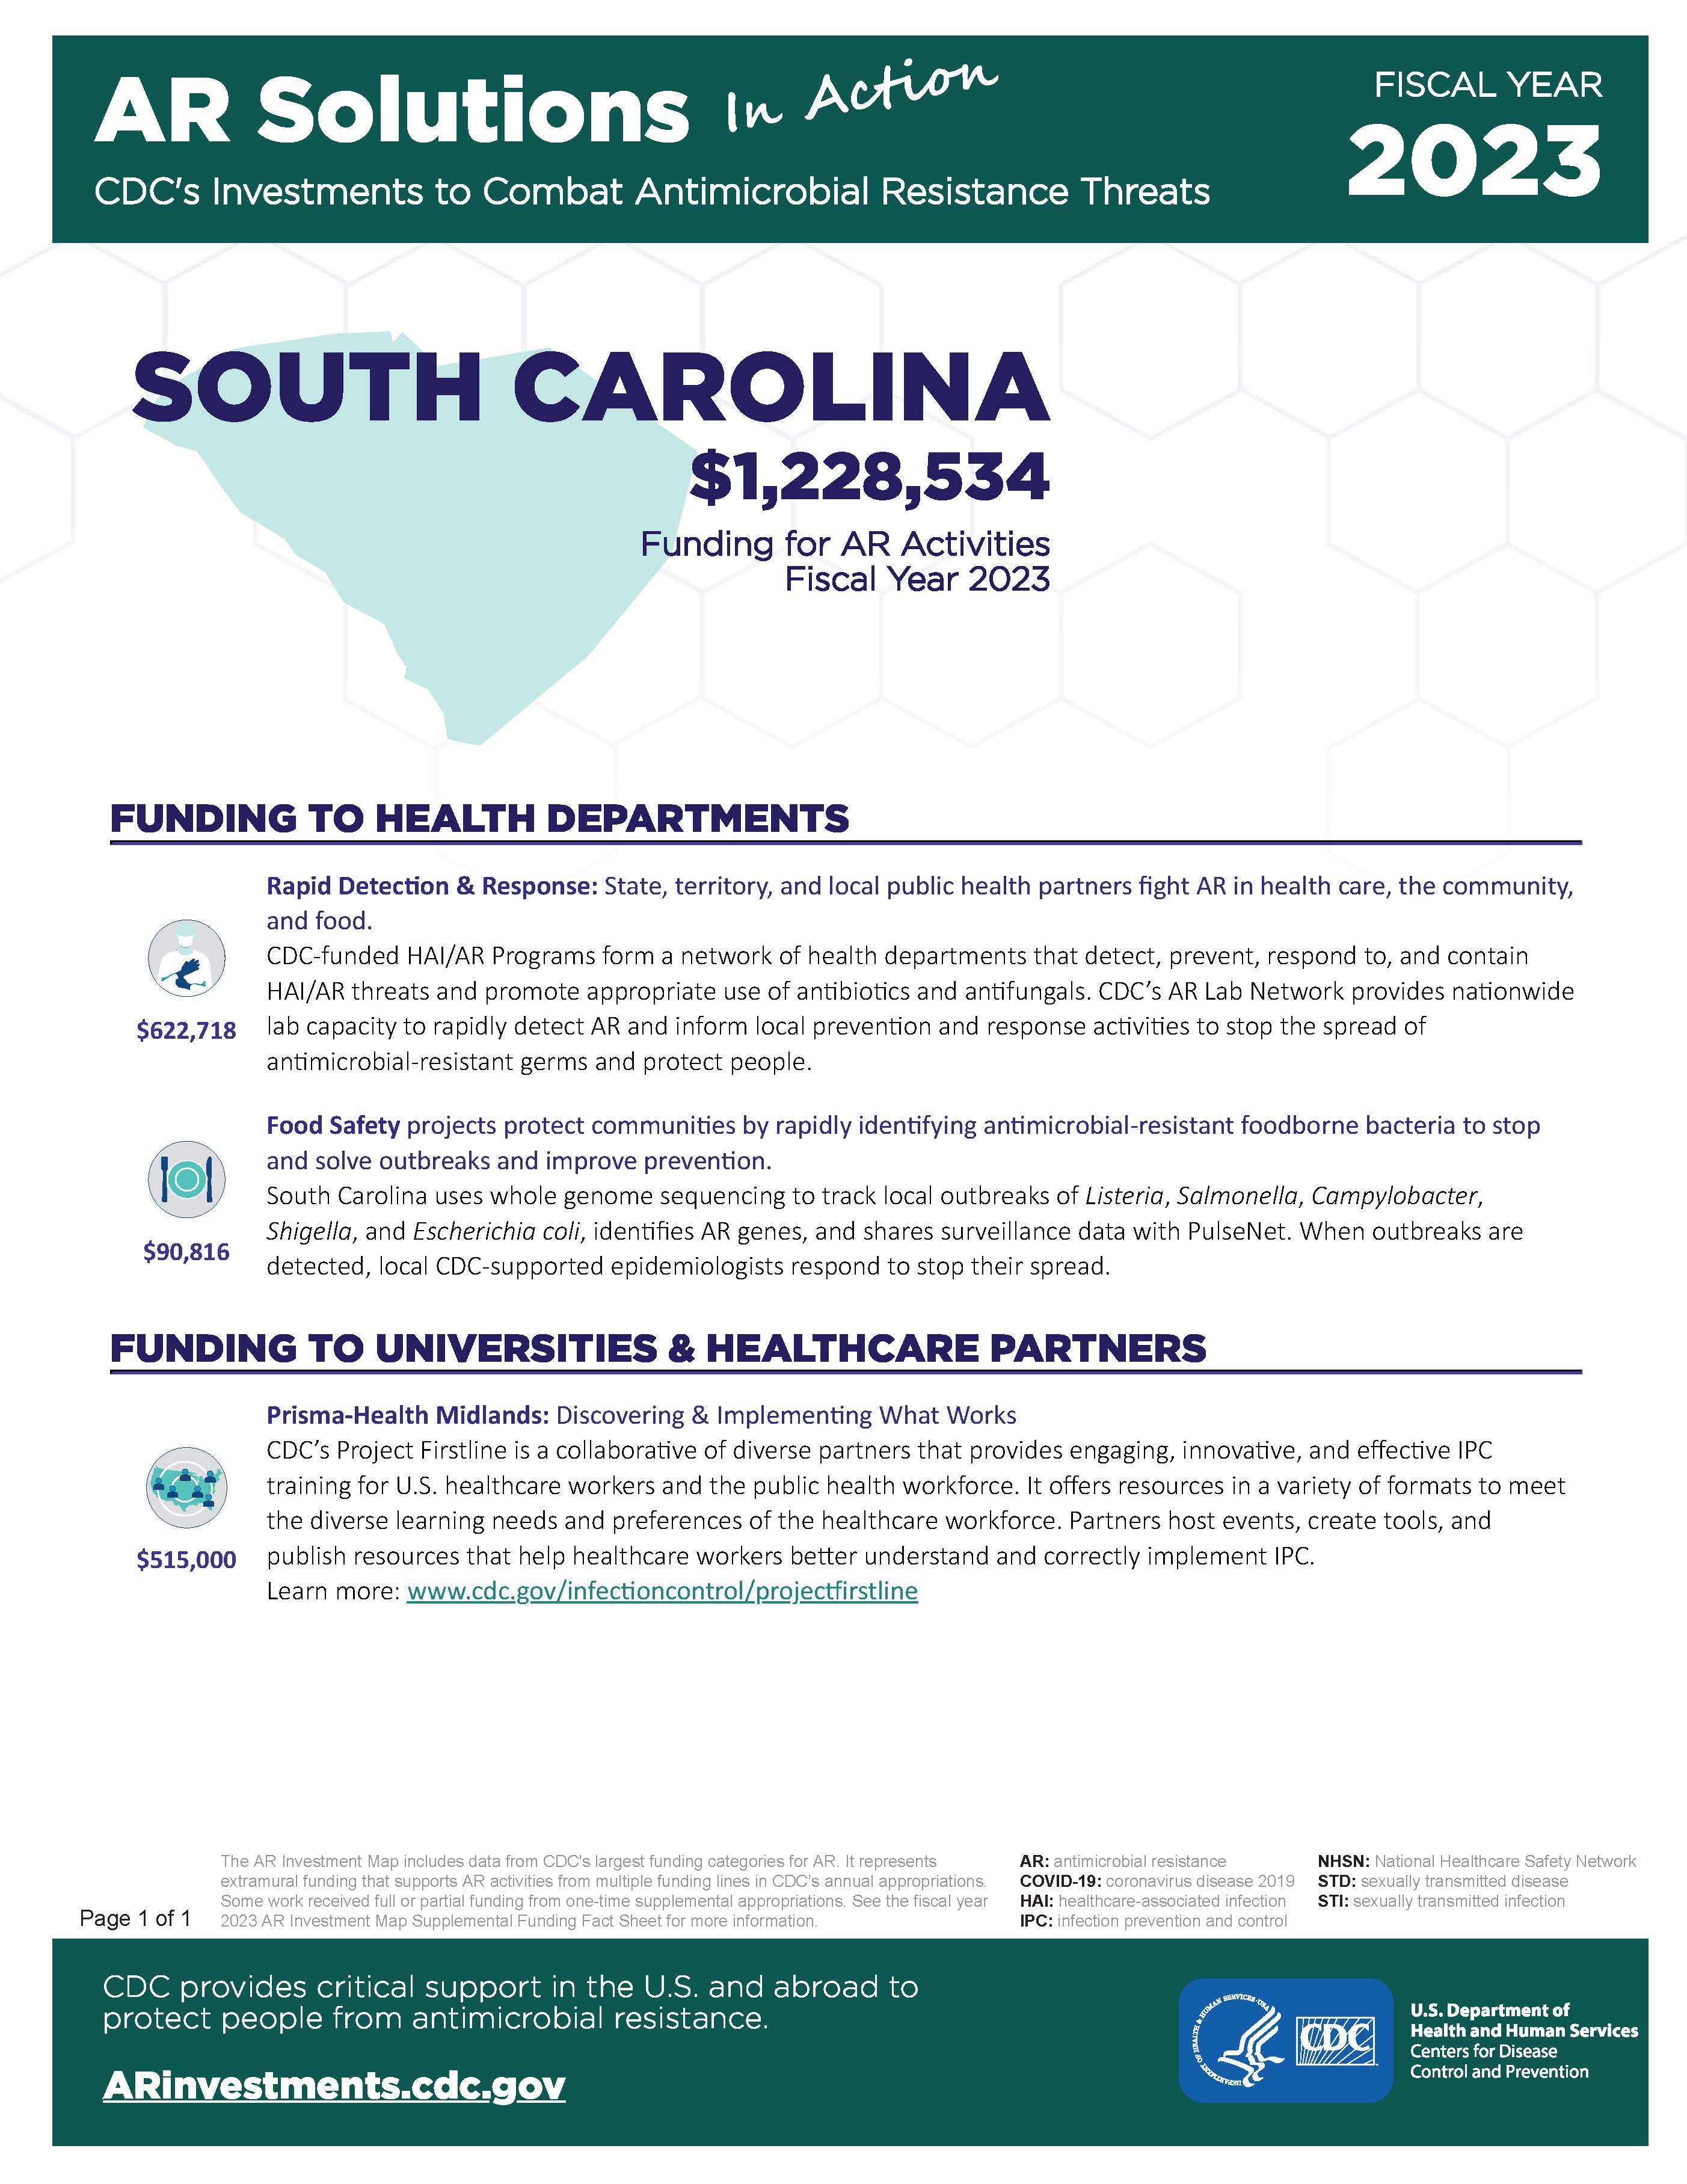 View Factsheet for South Carolina